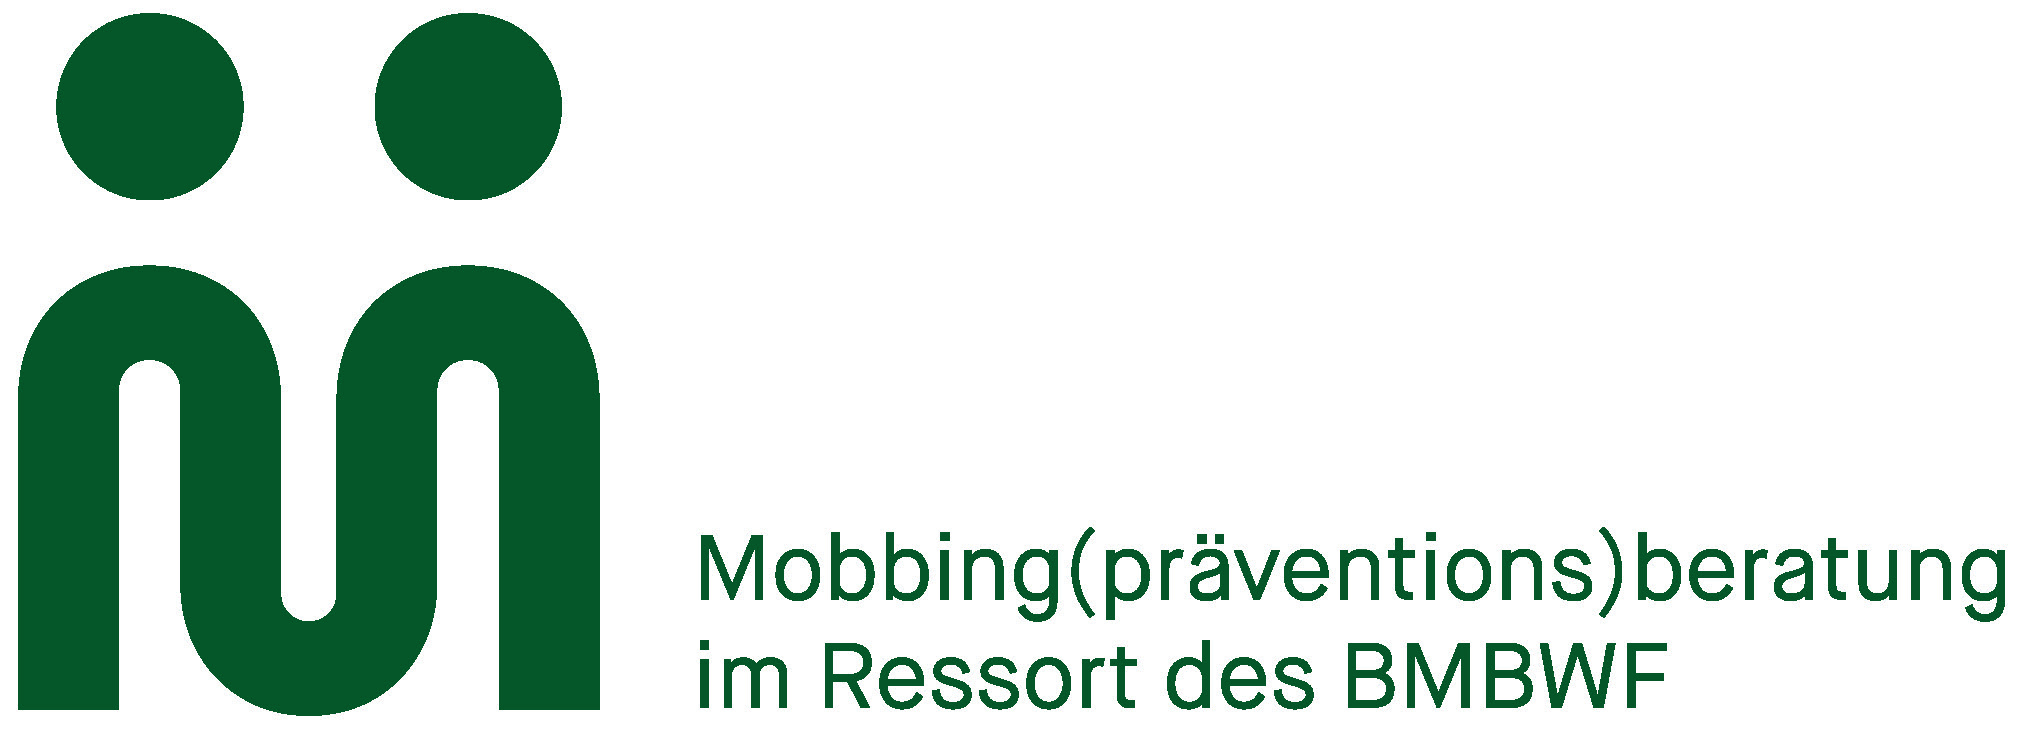 Mobbing(präventions)beratung im Ressort des BMBWF - Logo